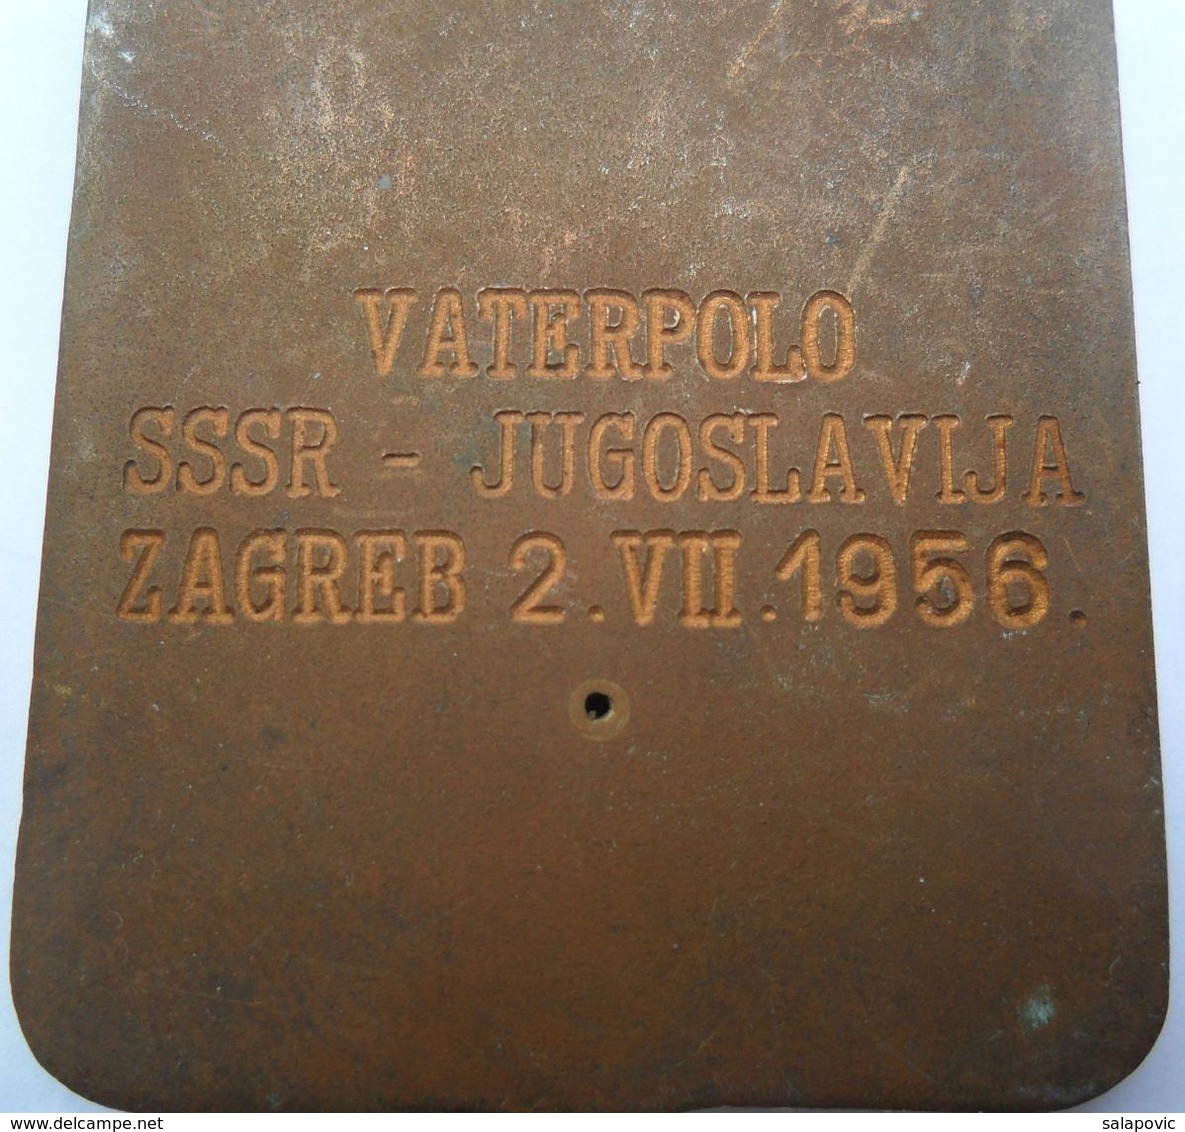 WATER POLO, VATERPOLO SSSR - JUGOSLAVIJA, ZAGREB 2.7.1956  PLAQUE PLIM - Zwemmen